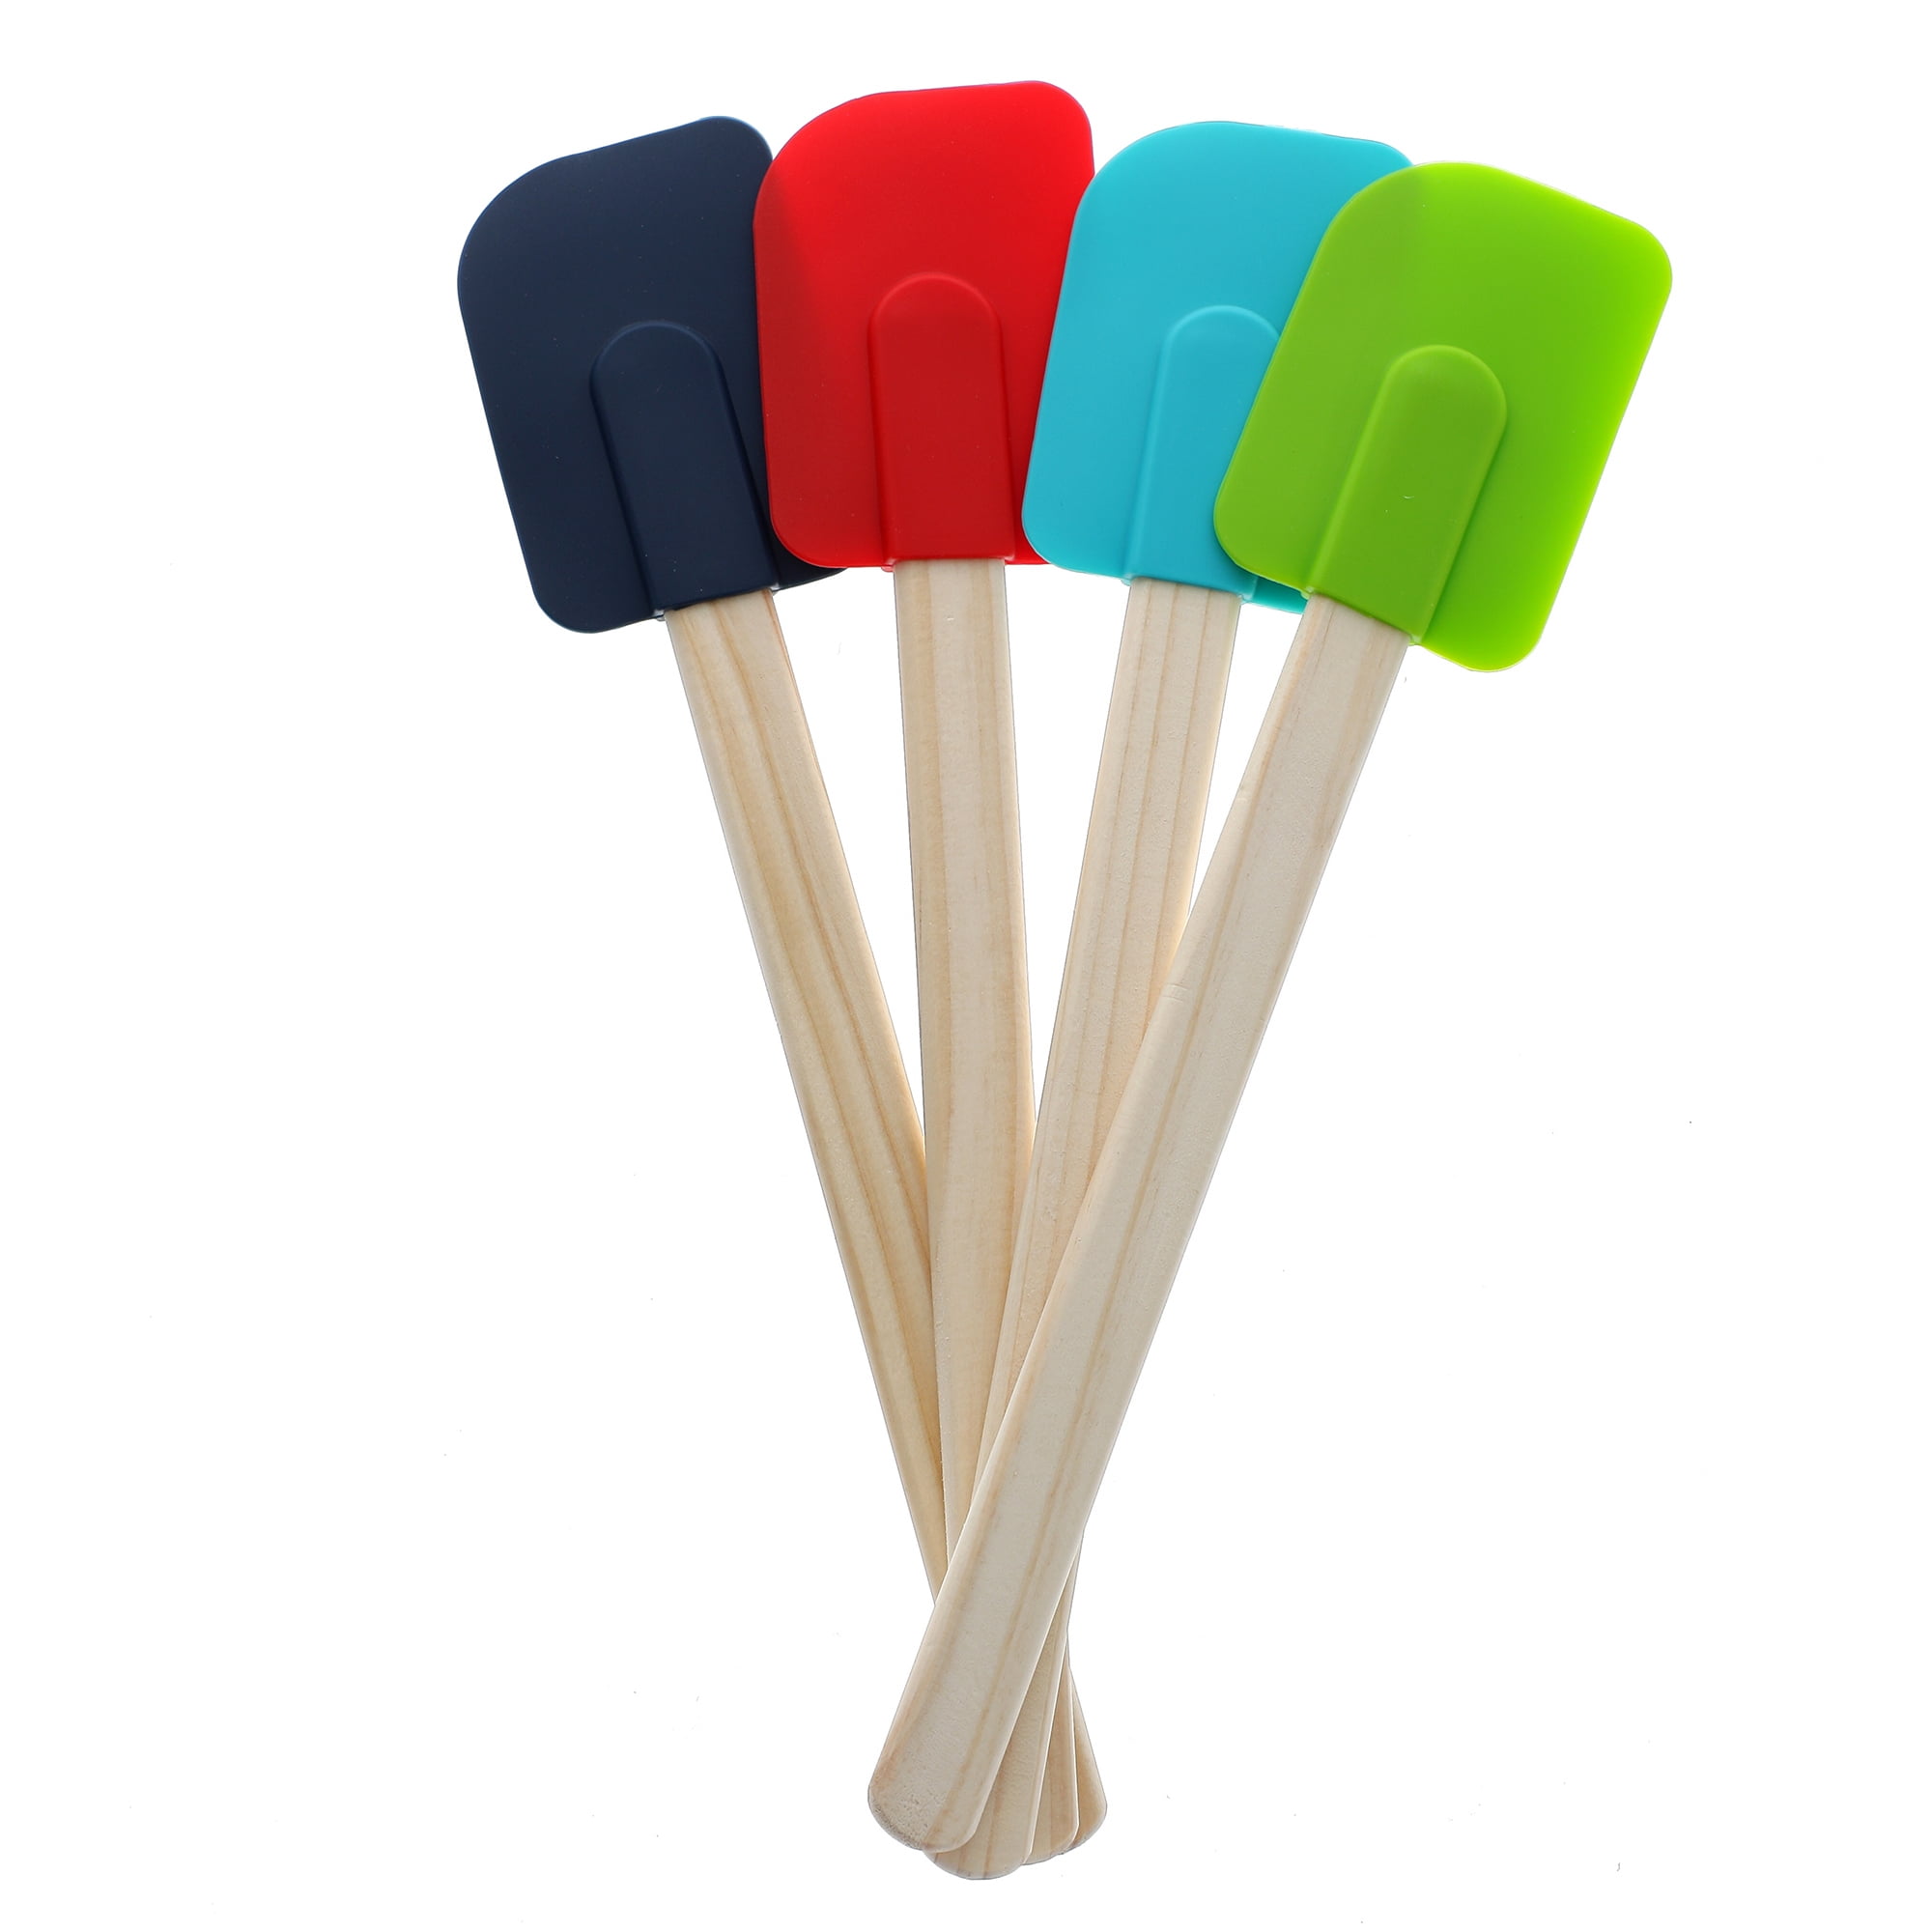 spatula, silicone & wood handle cayenne